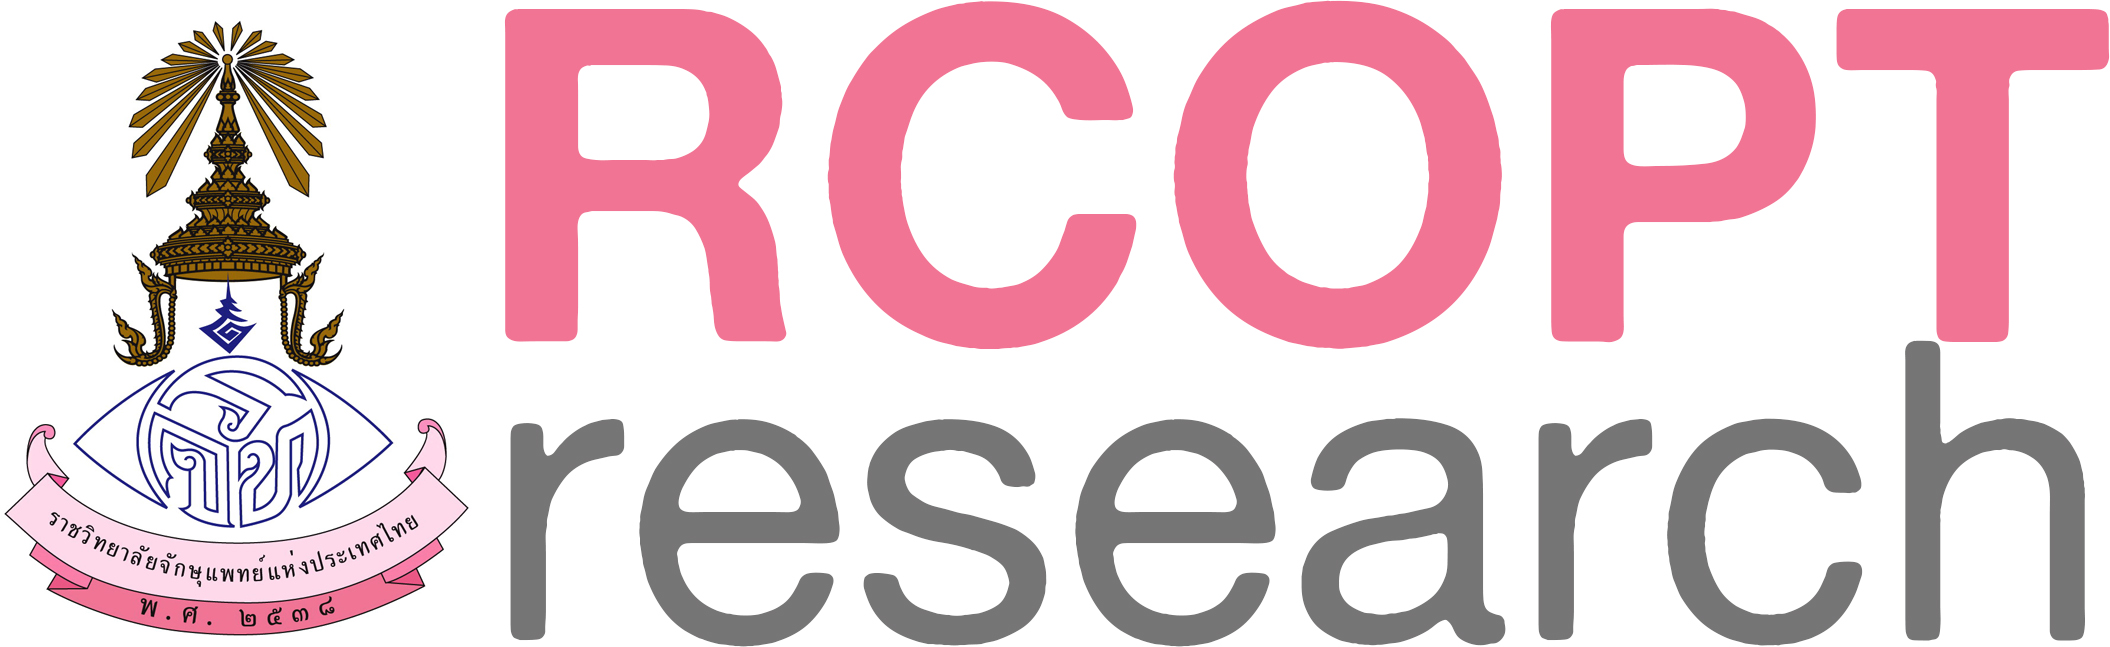 1561RCOPT research logo1.jpg